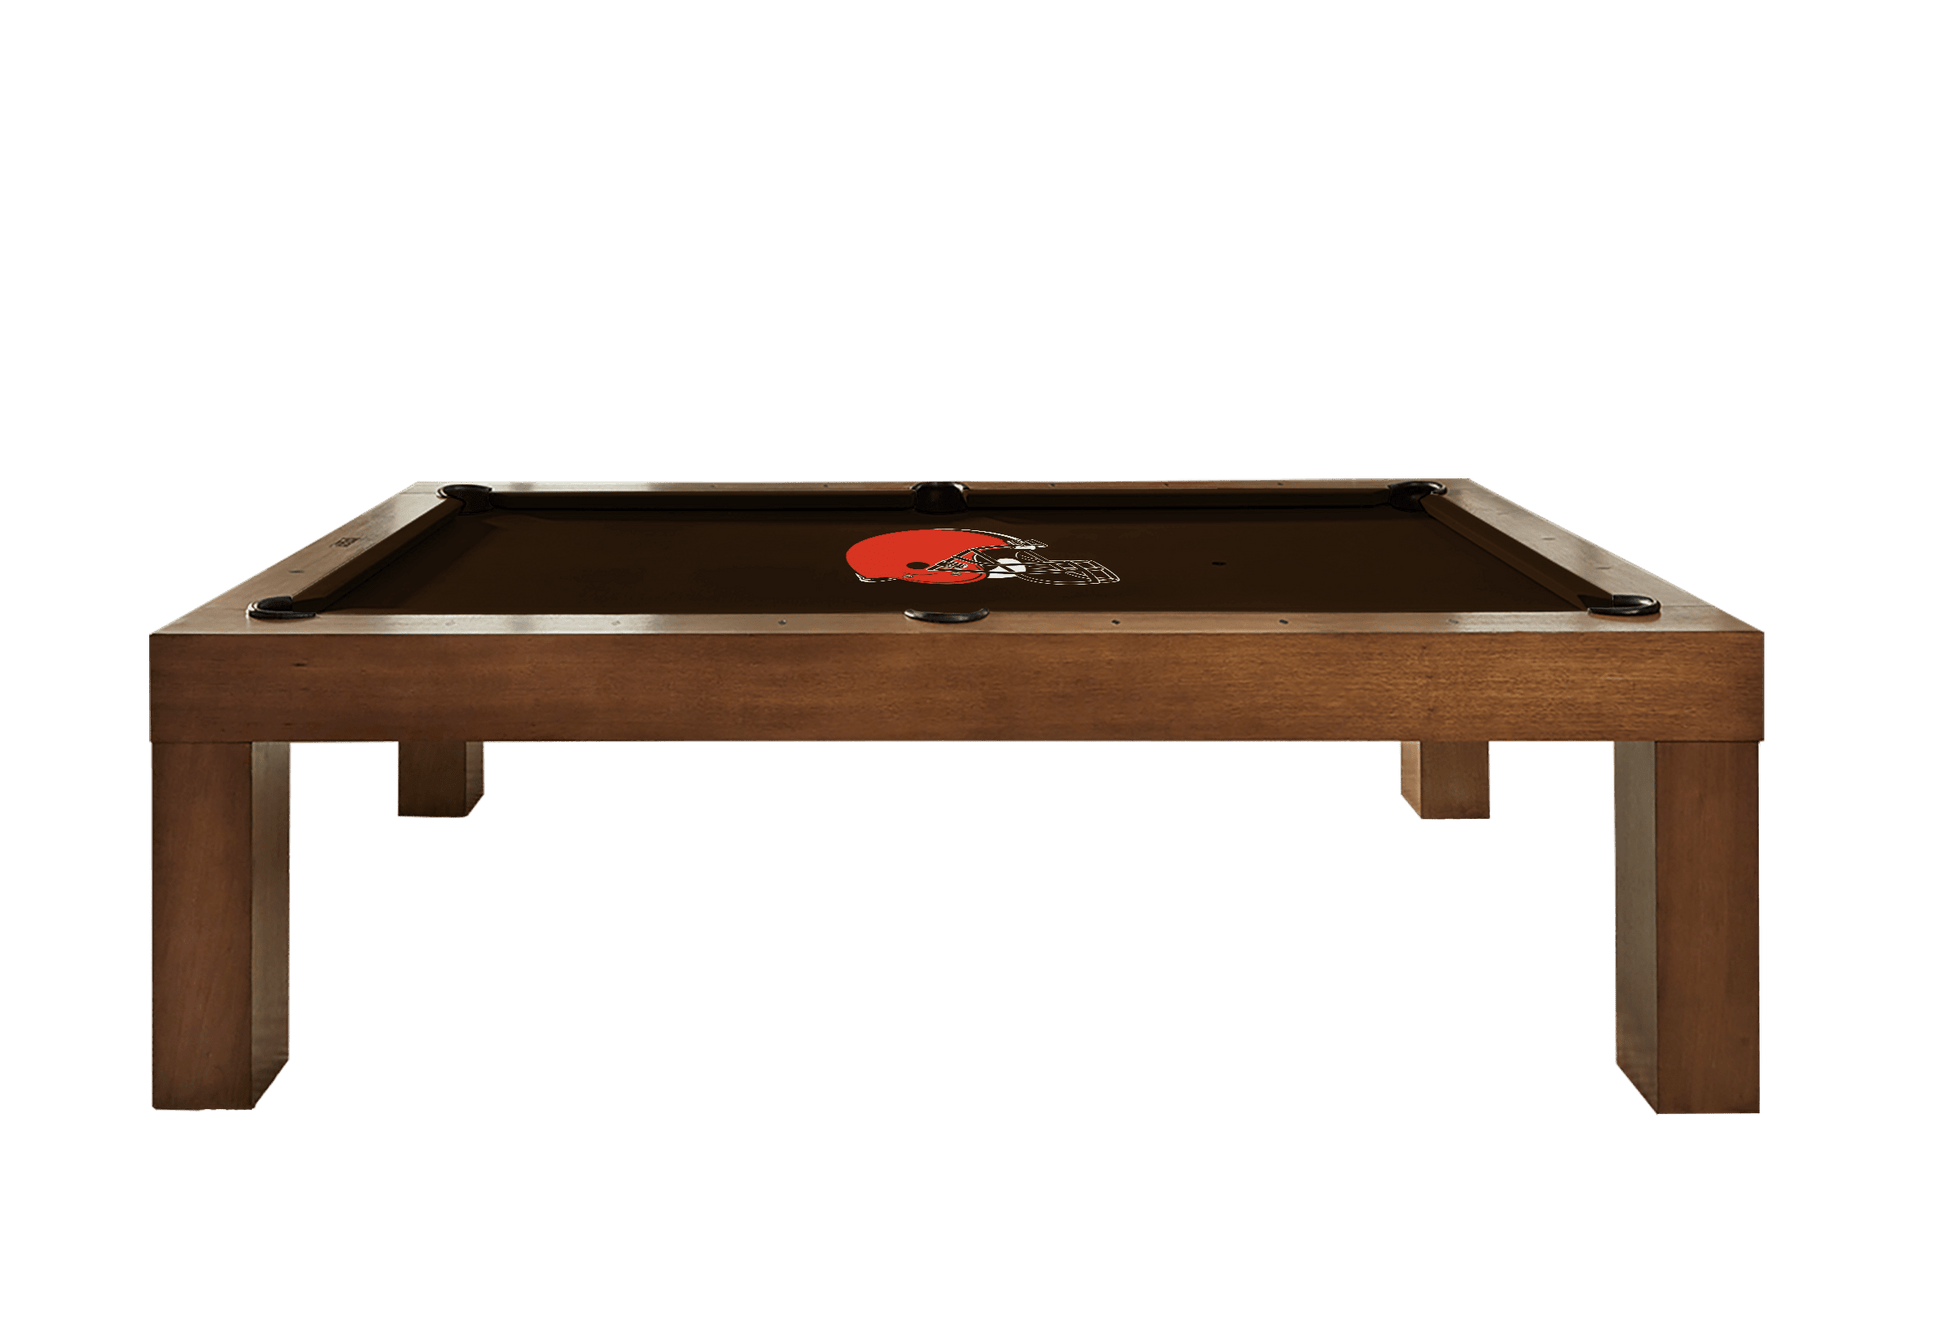 Cleveland Browns Premium Pool Table Bundle - Walnut Pool Bundle Home Arcade Games   